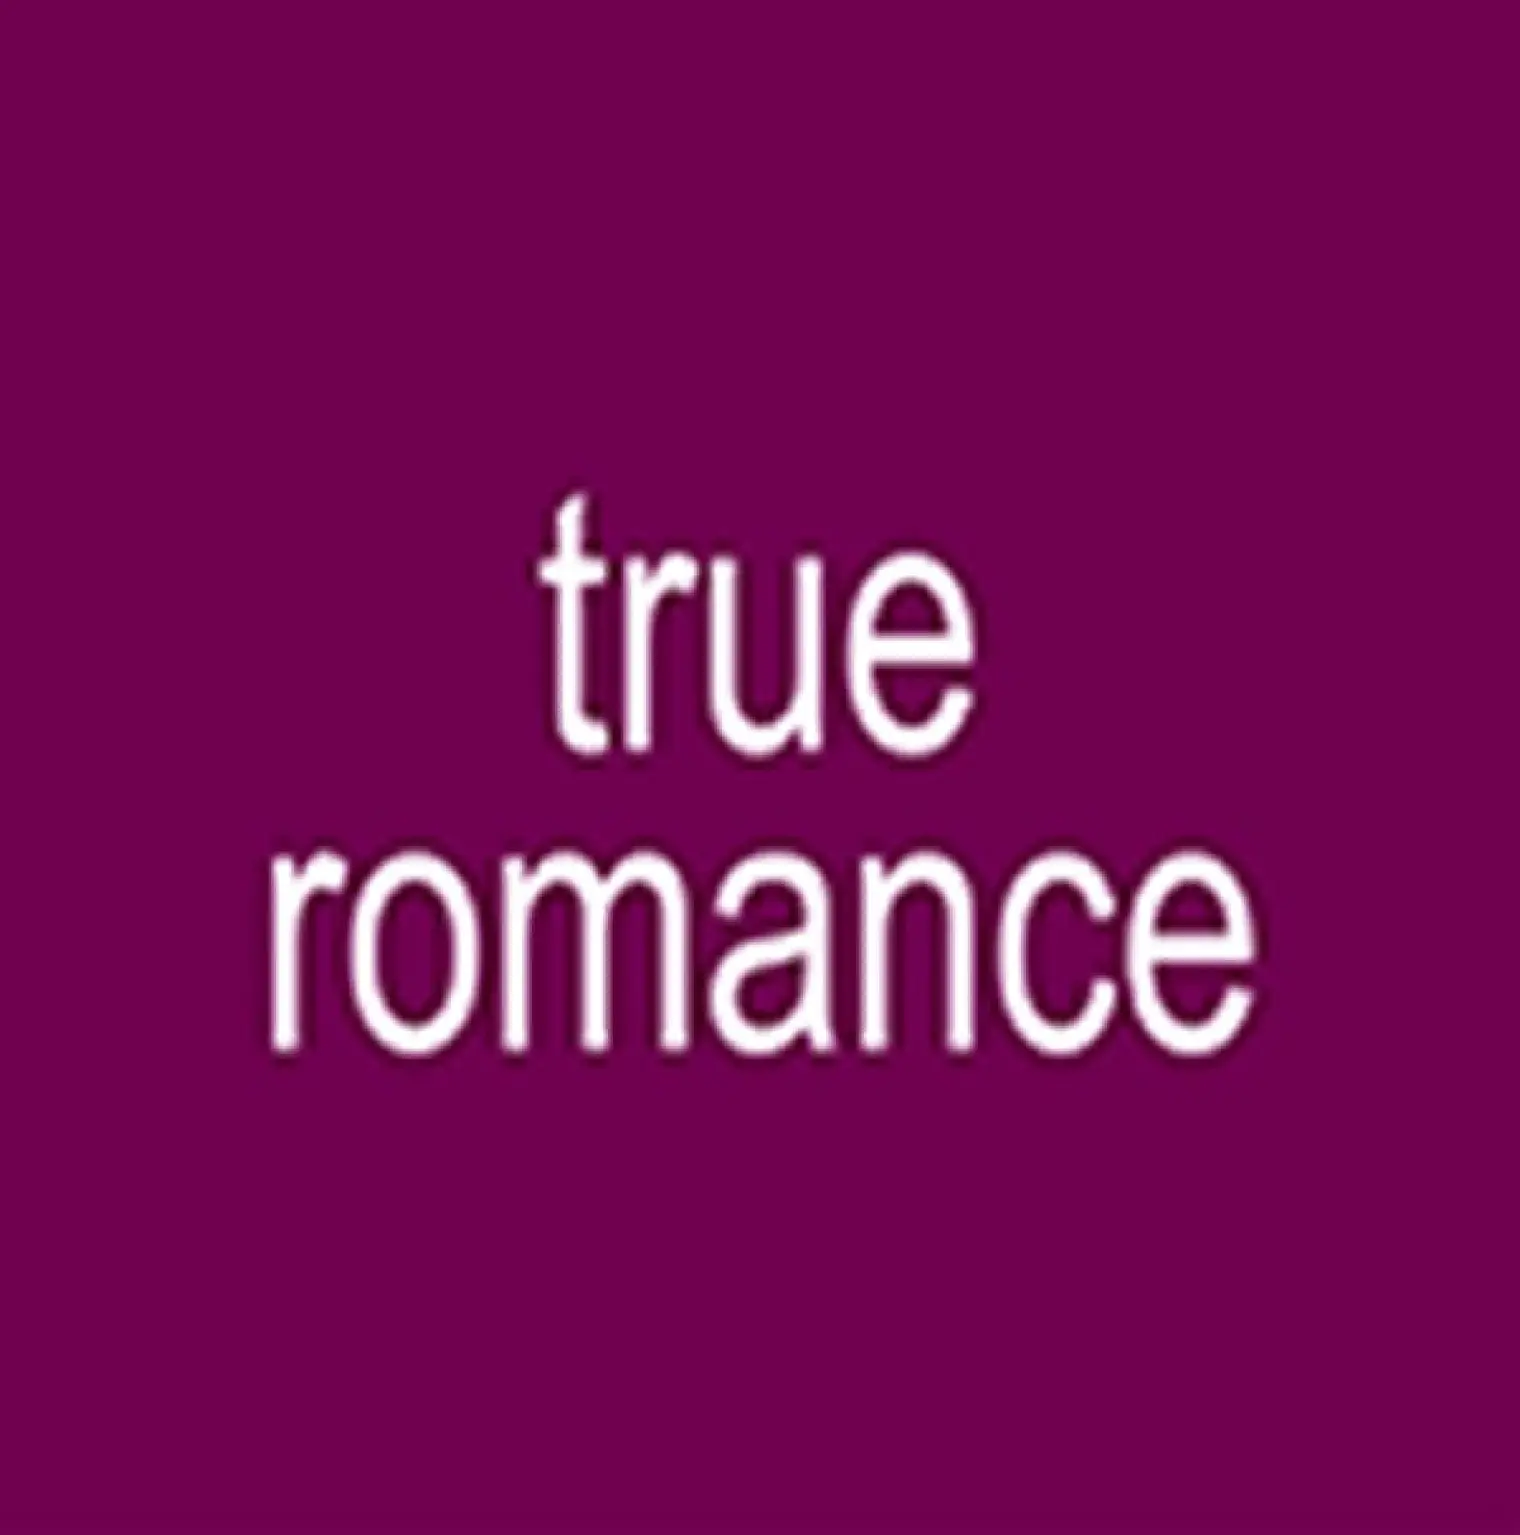 True Romance -  Charli Xcx 